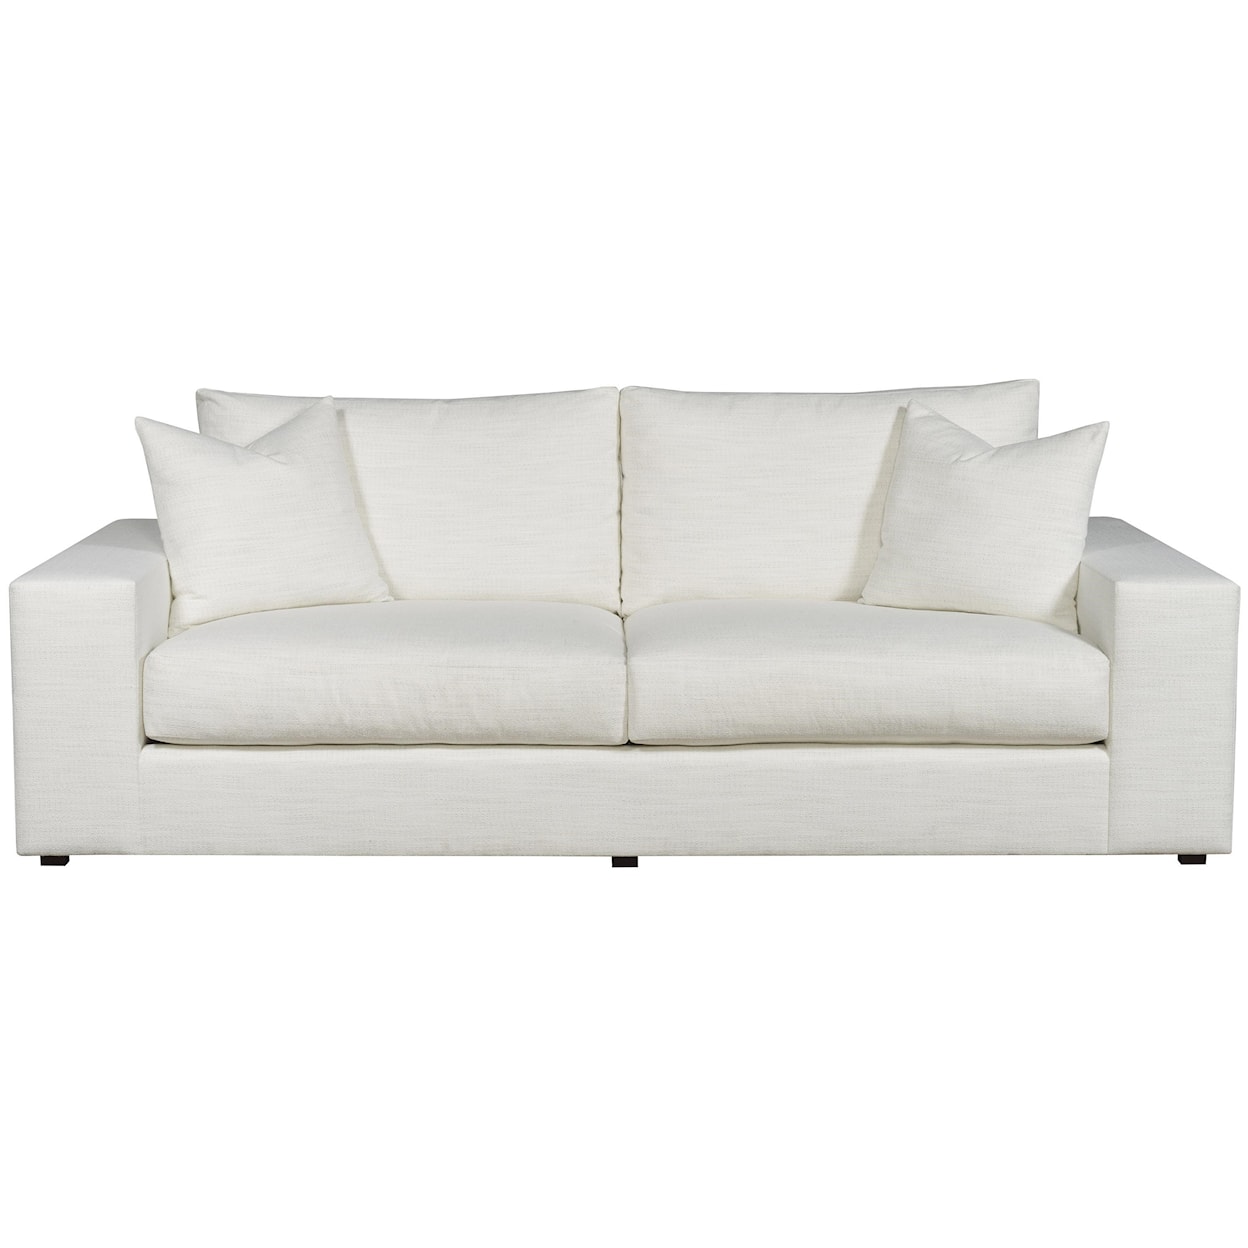 Vanguard Furniture Lucca Two-Seat Sofa